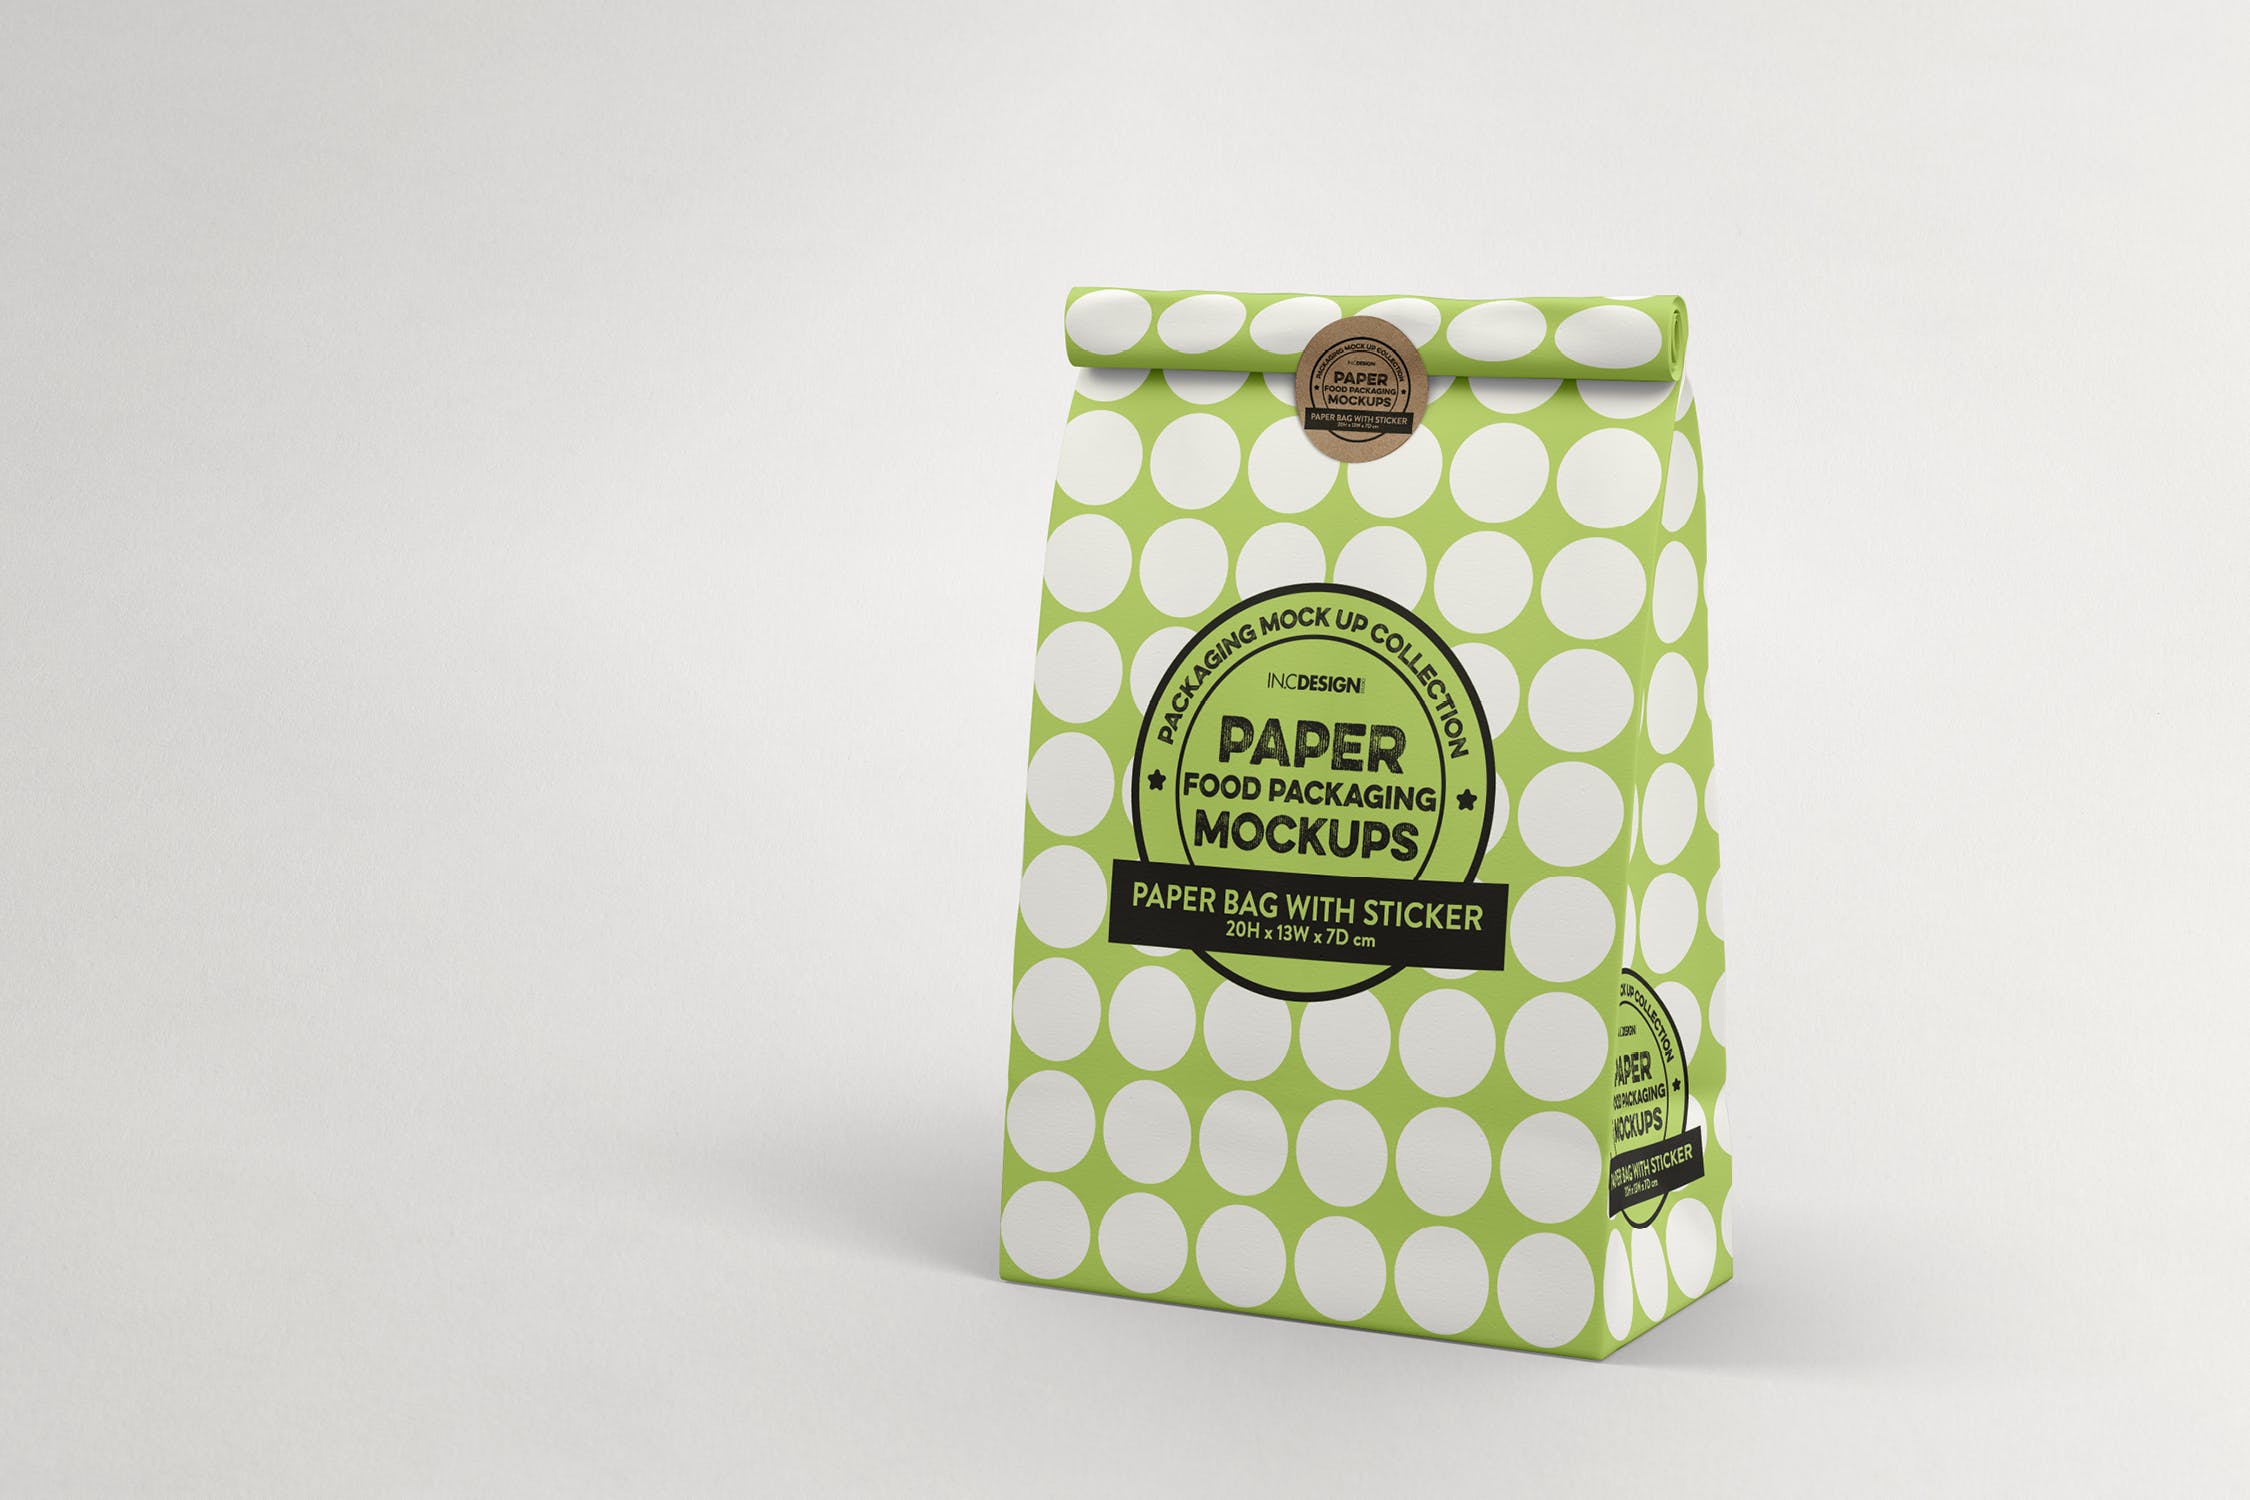 贴纸密封包装纸袋设计效果图第一素材精选 Paper Bag with sticker Seal Packaging Mockup插图(2)